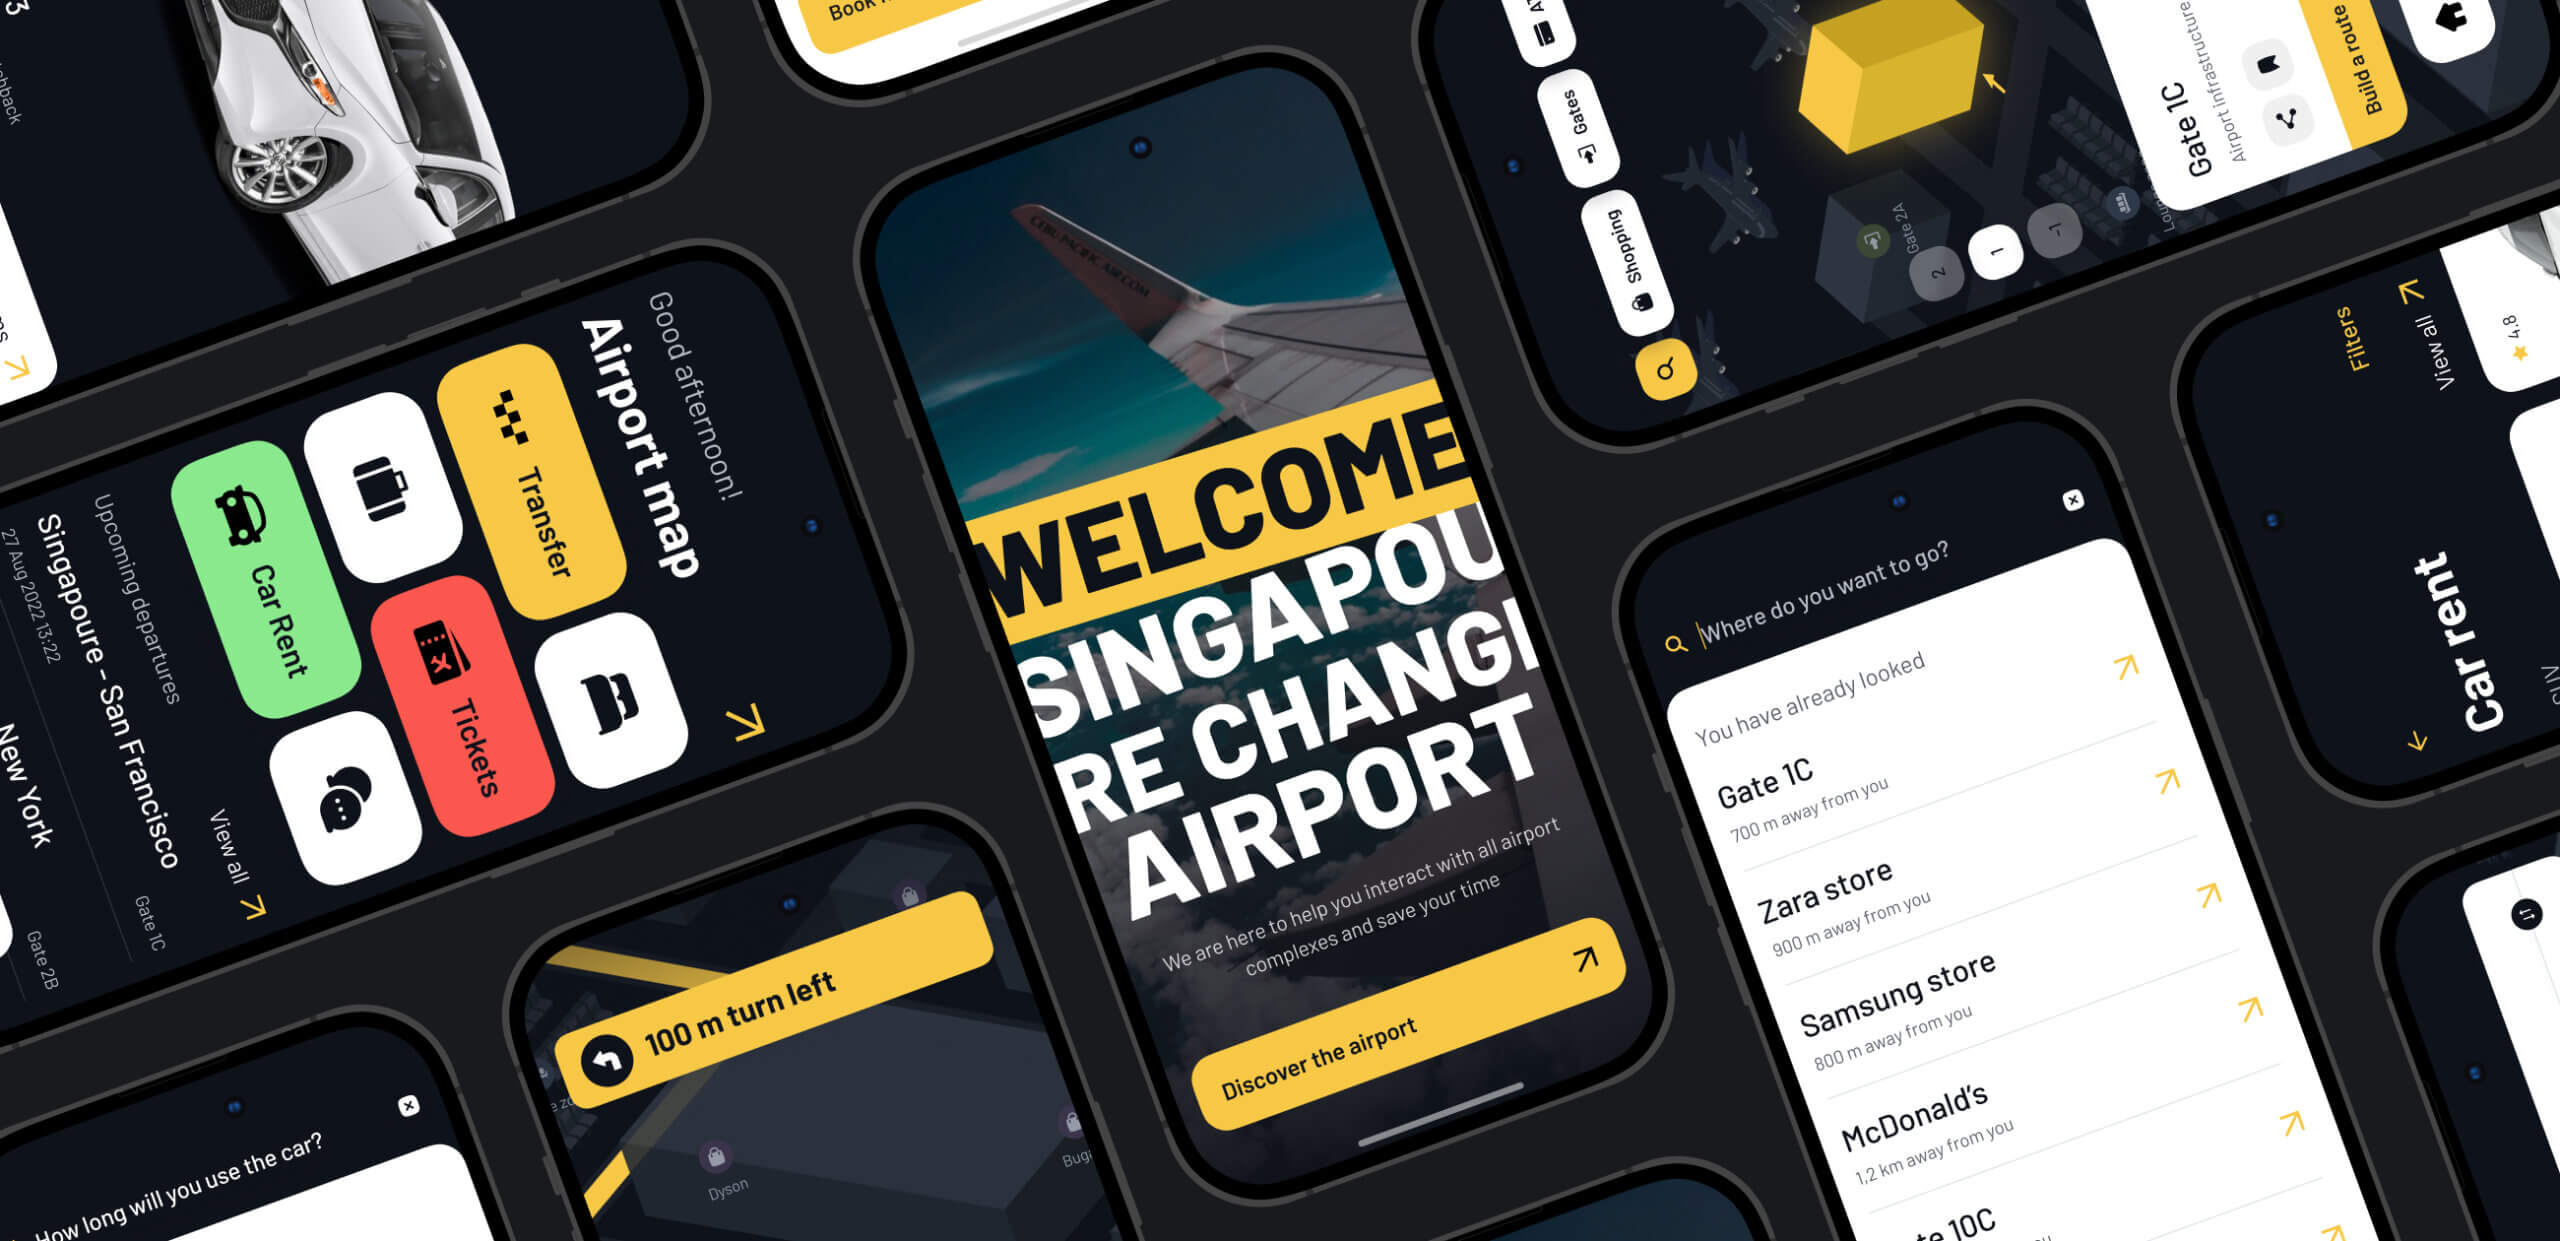 Sinport – Singapore Airport navigation app - Website Development - Photo 1